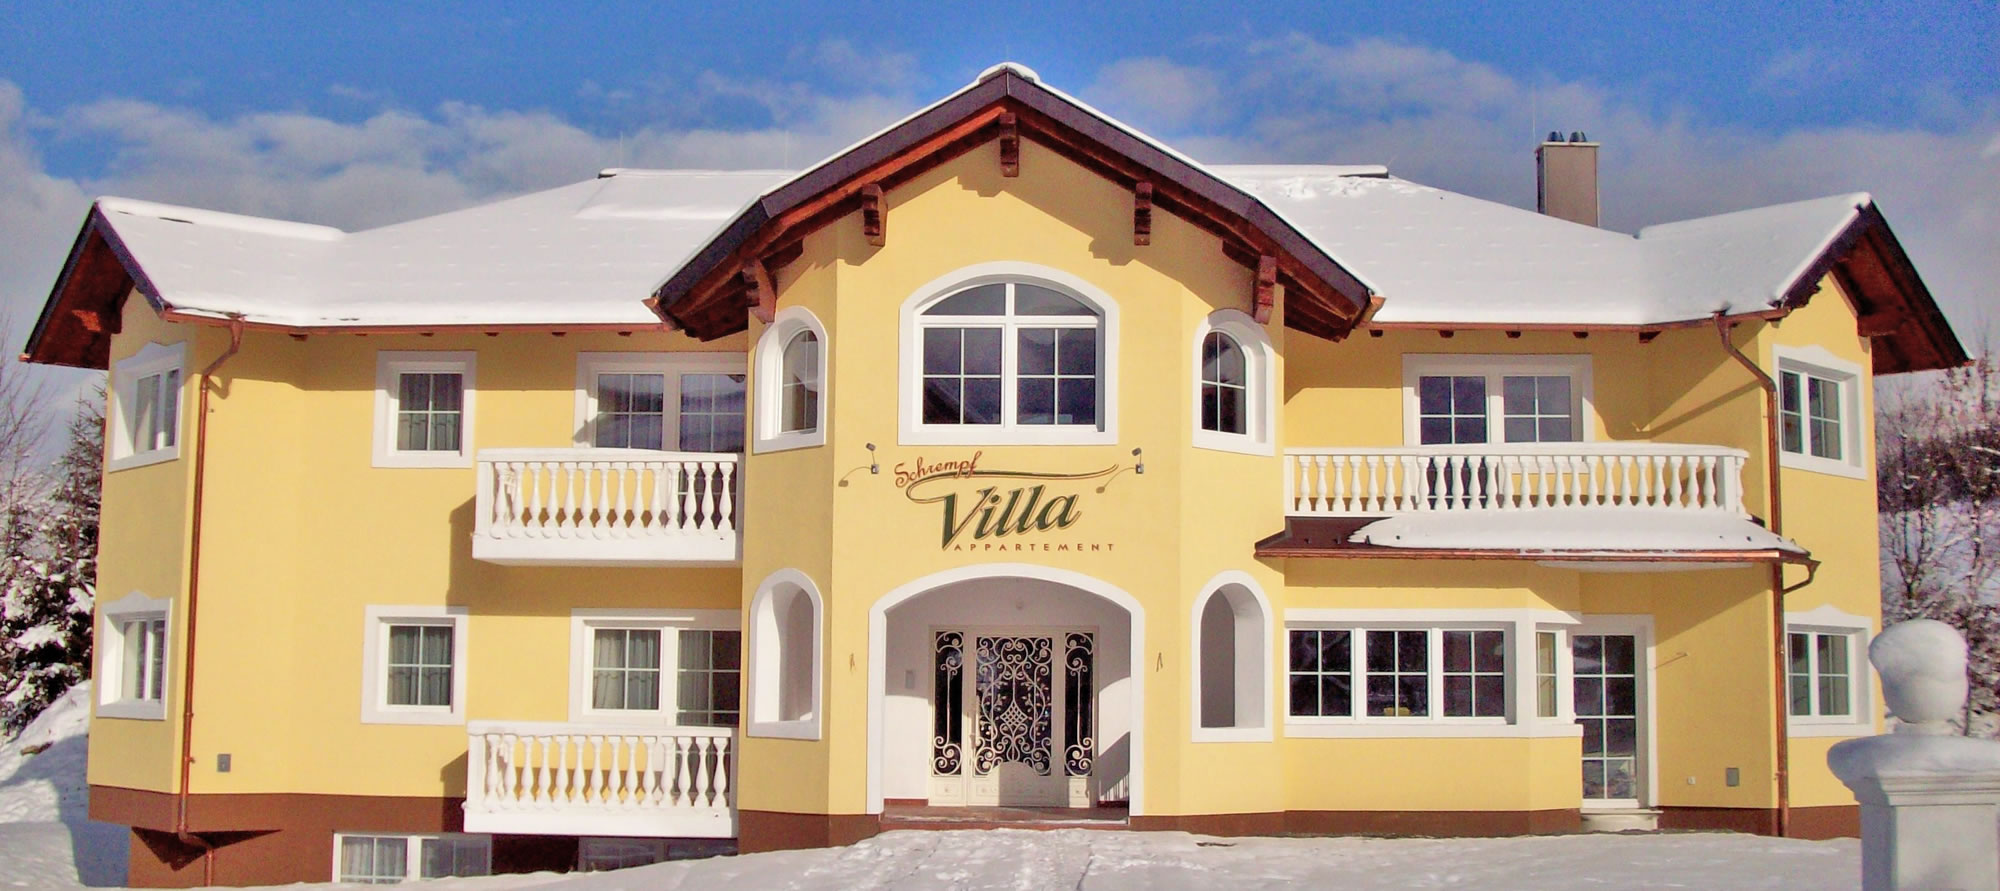 Spacious holiday apartments at Villa Schrempf in Flachau